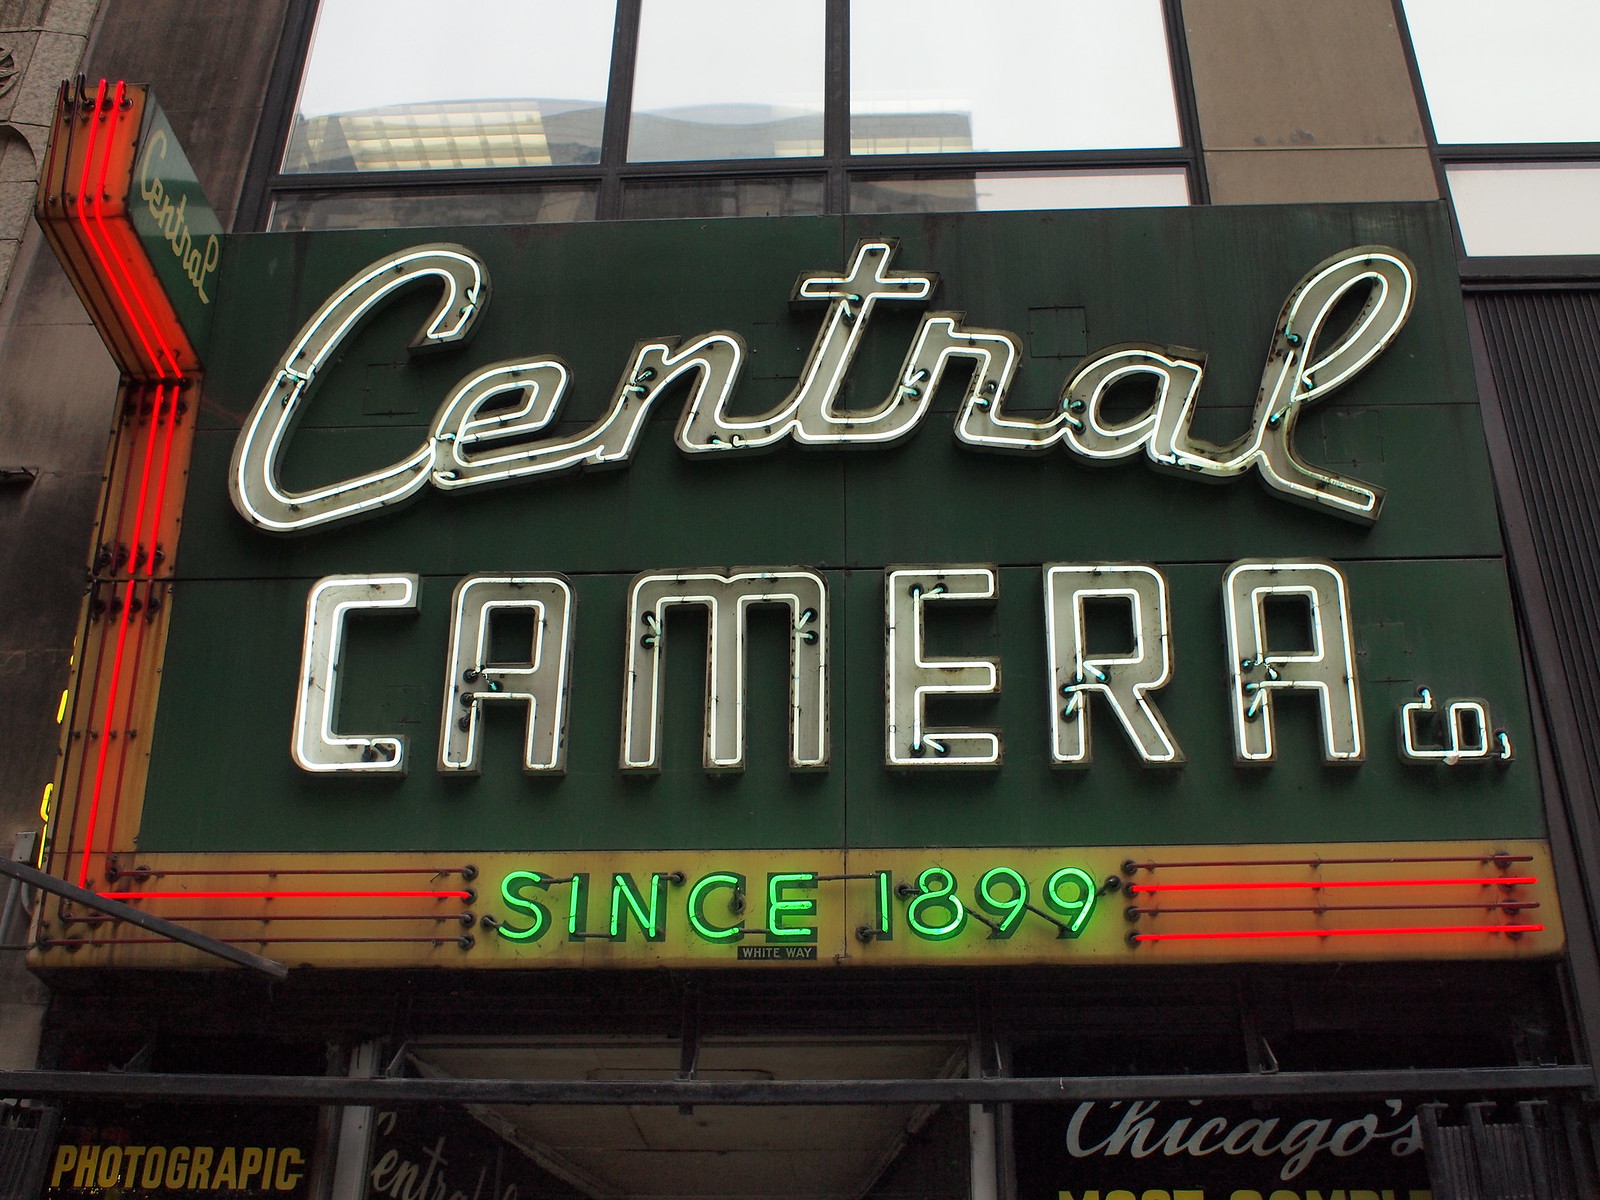 Central Camera Co. - 230 South Wabash Avenue, Chicago, Illinois U.S.A. - November 10, 2009